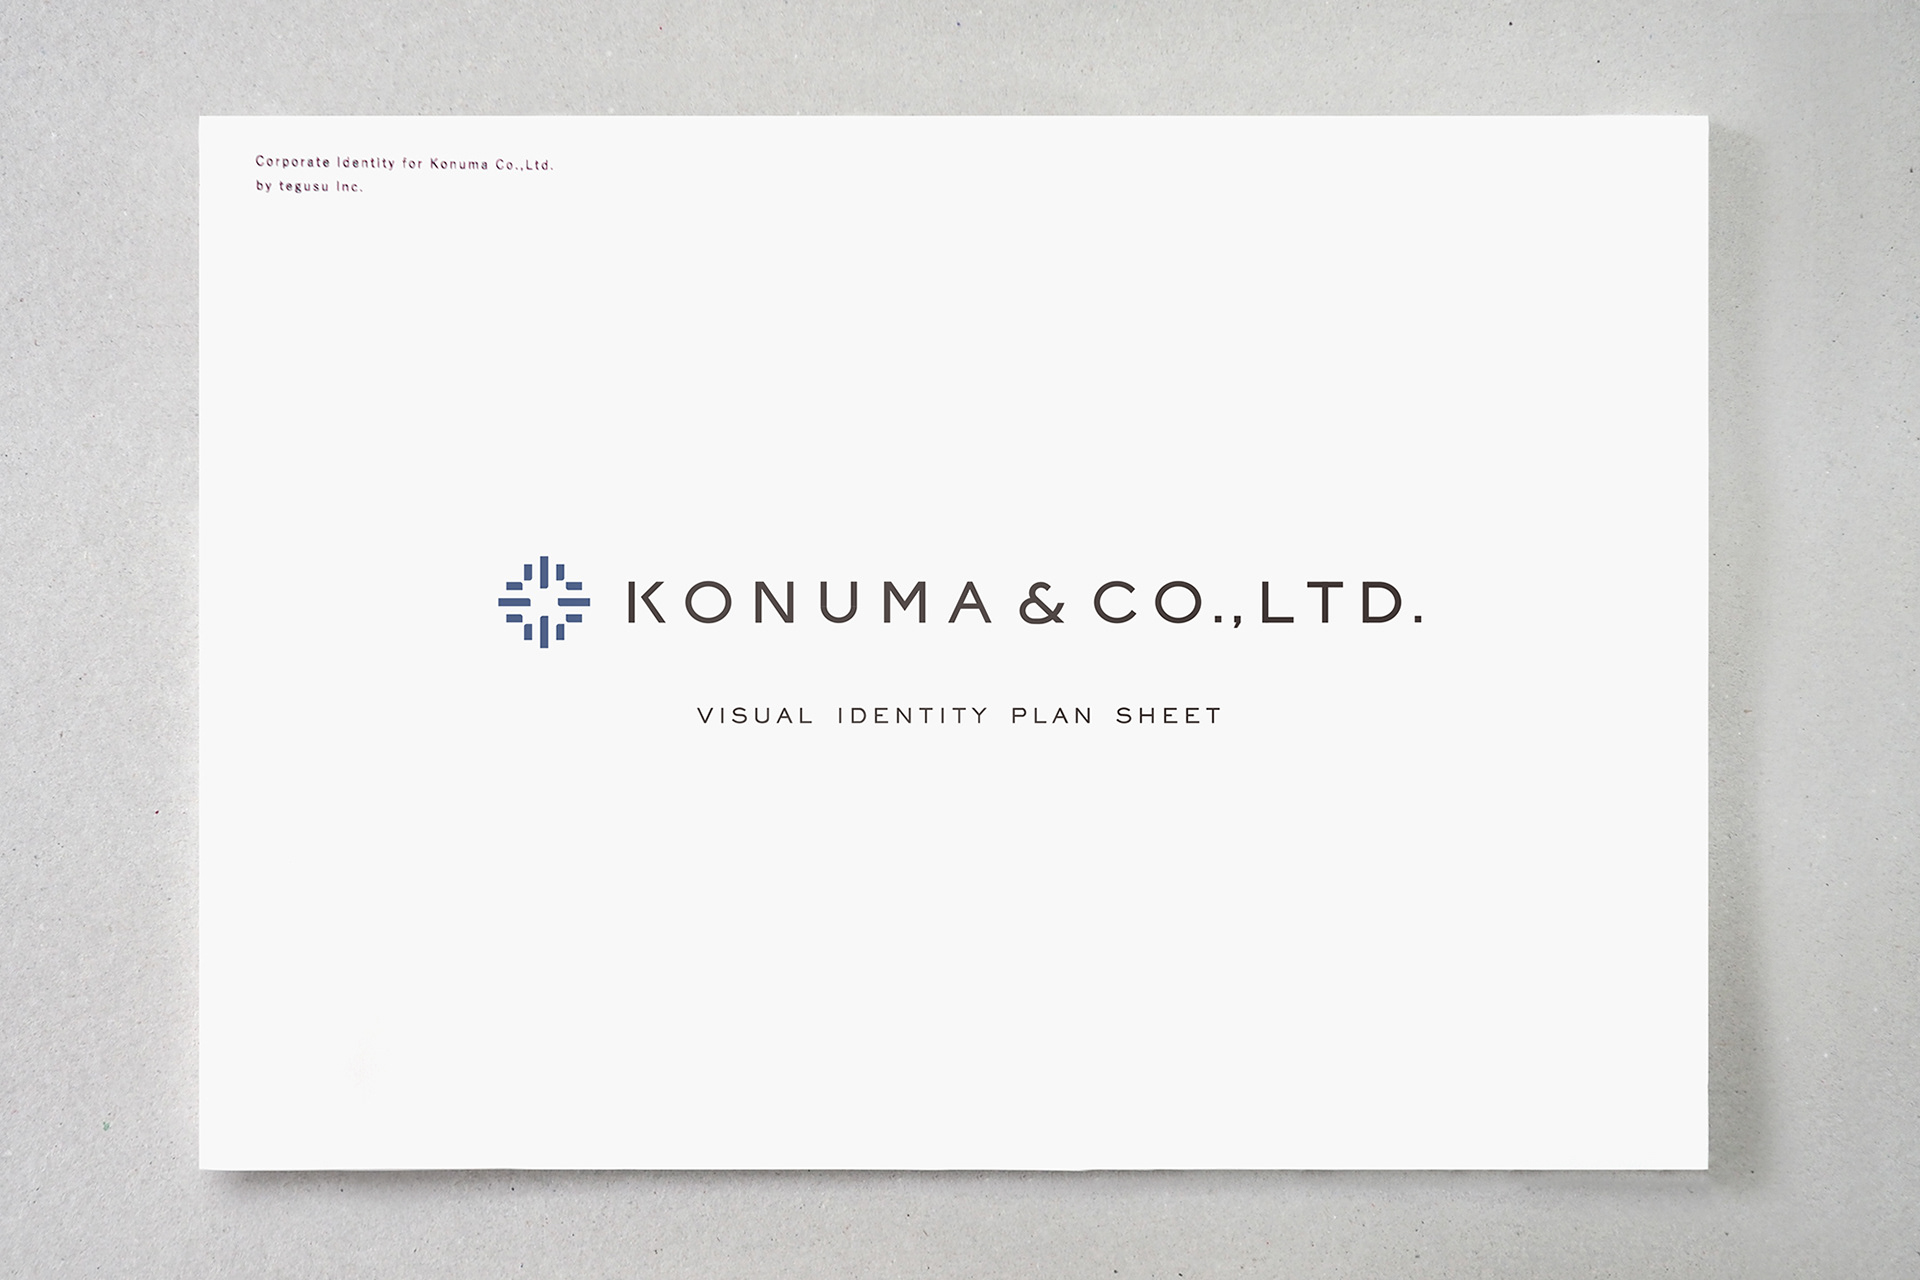 tegusu - Konuma & Co., Ltd.